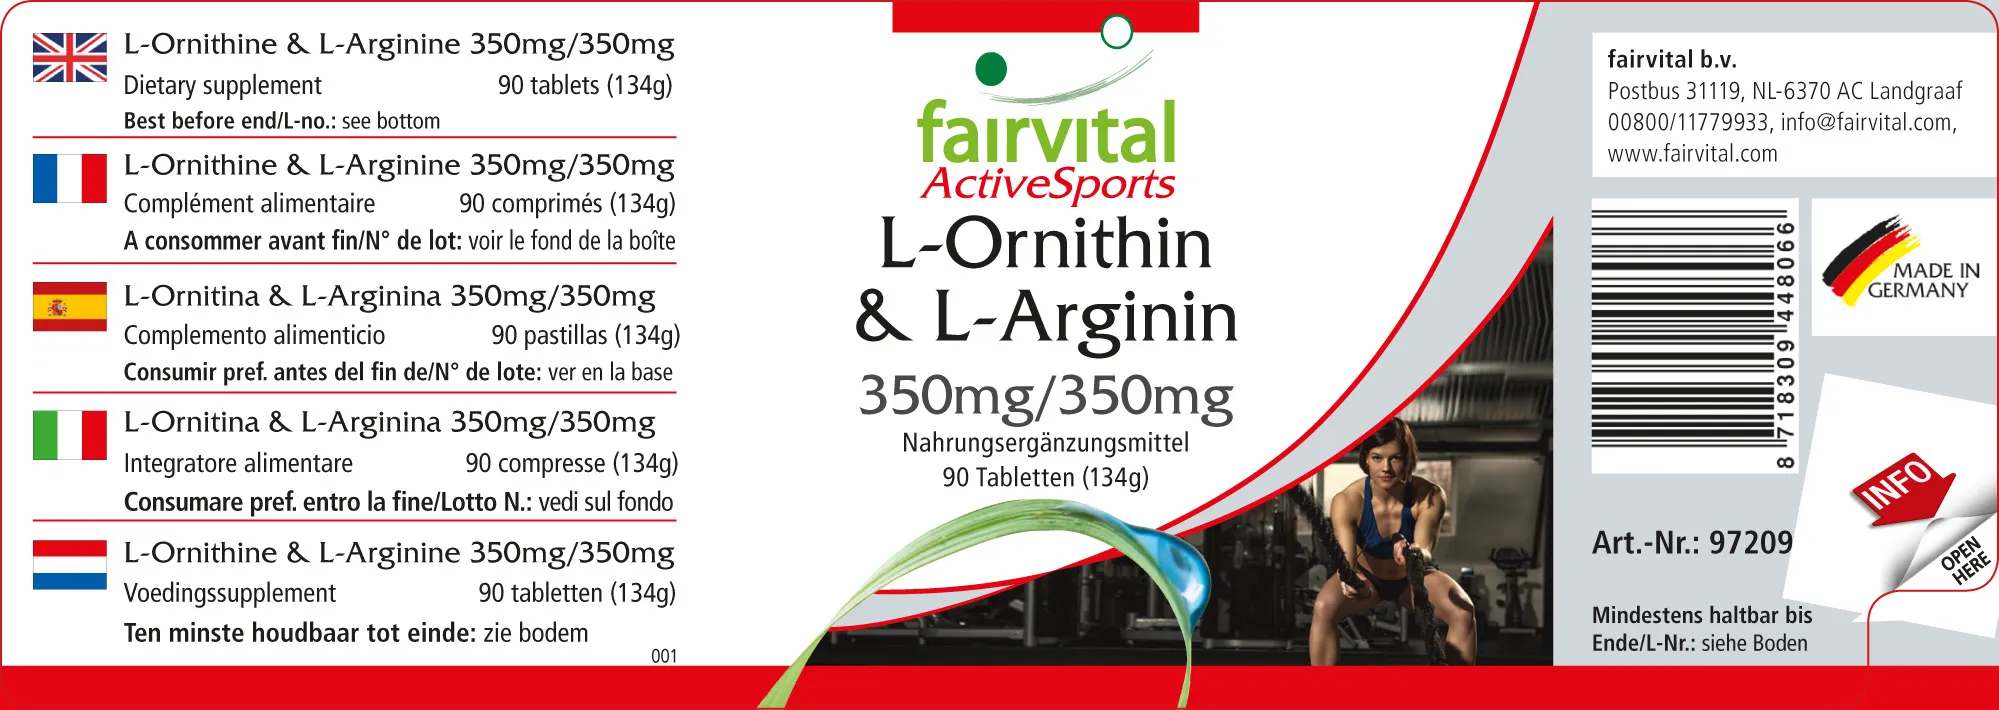 L-ornithine & L-arginine 350mg/350mg - 90 tablets